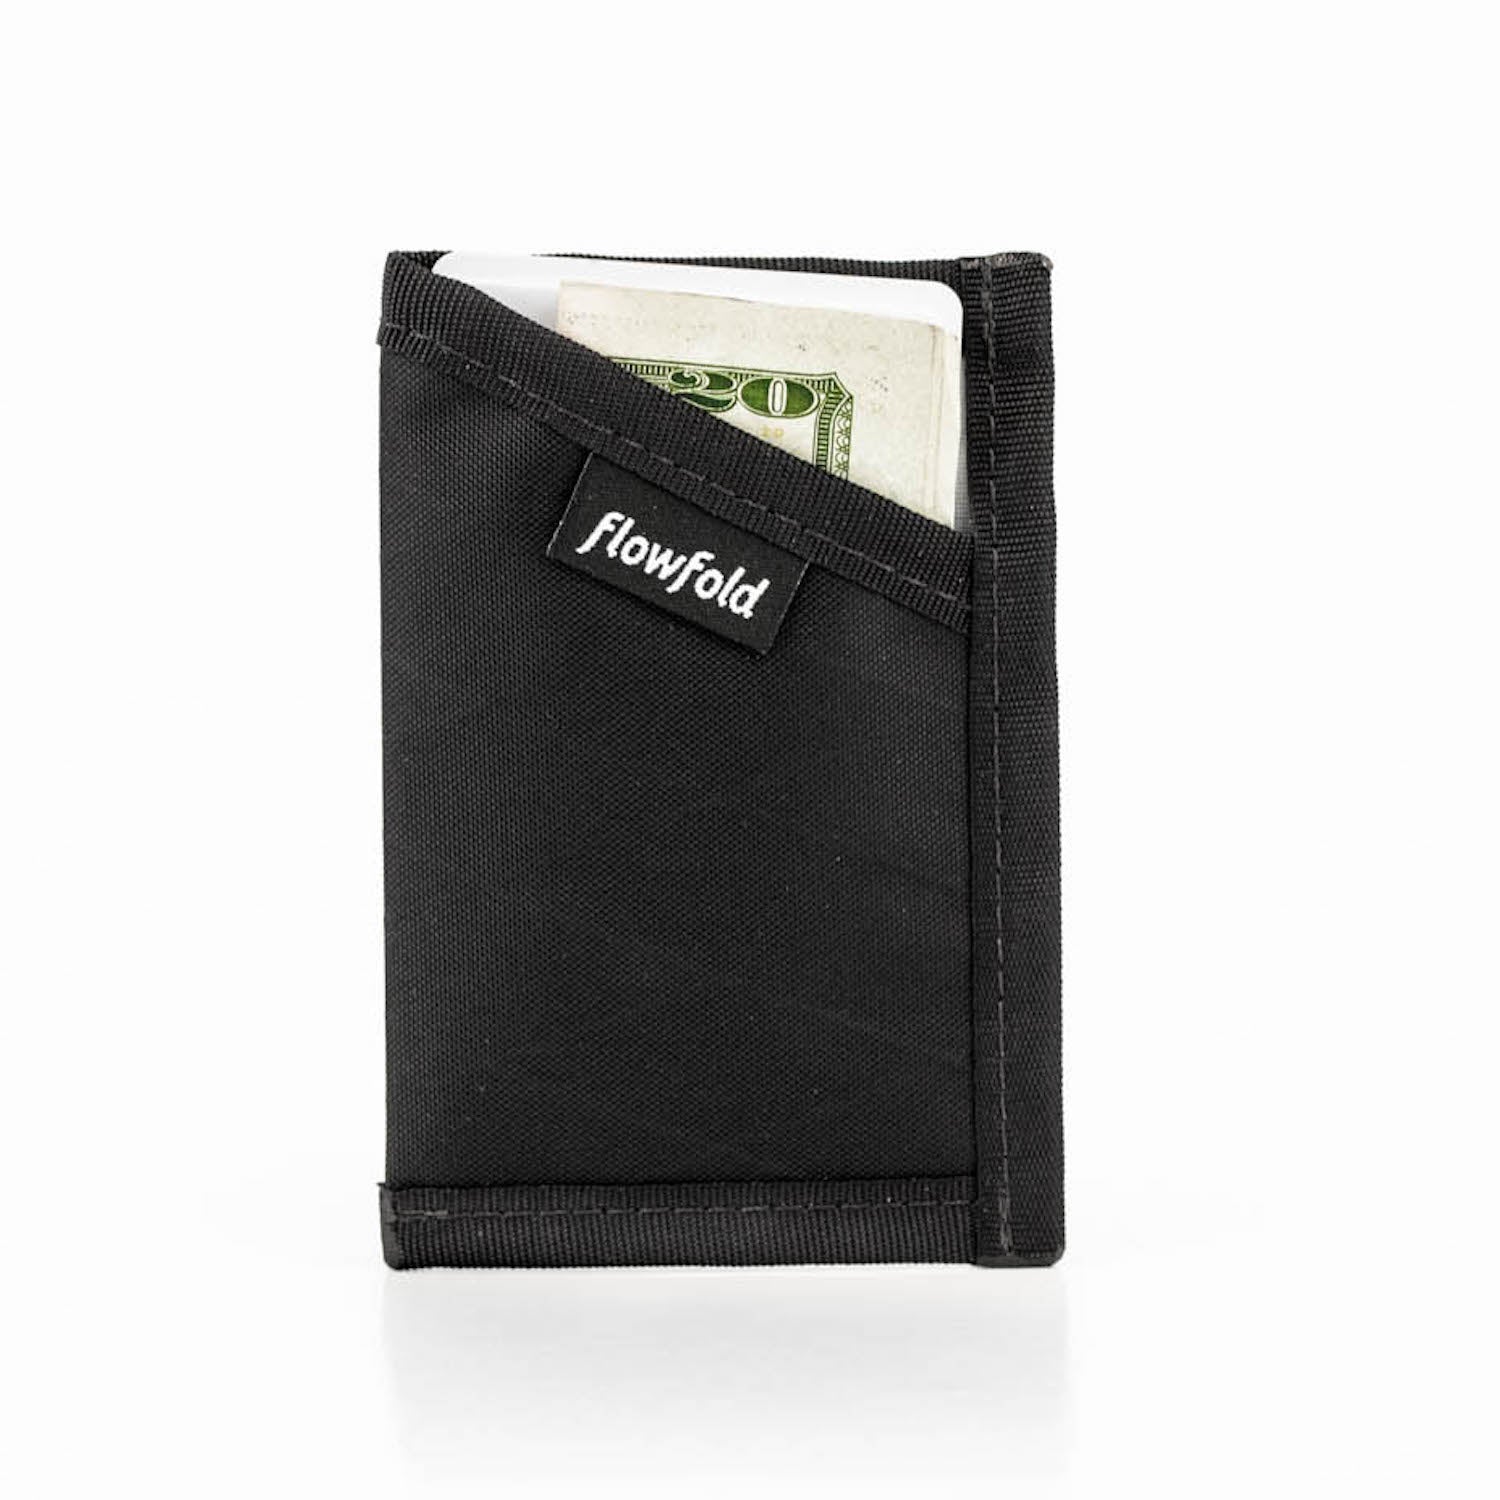 Flowfold Ultra Slim RFID Blocking Minimalist Card Holder Wallet Holds card and cash 